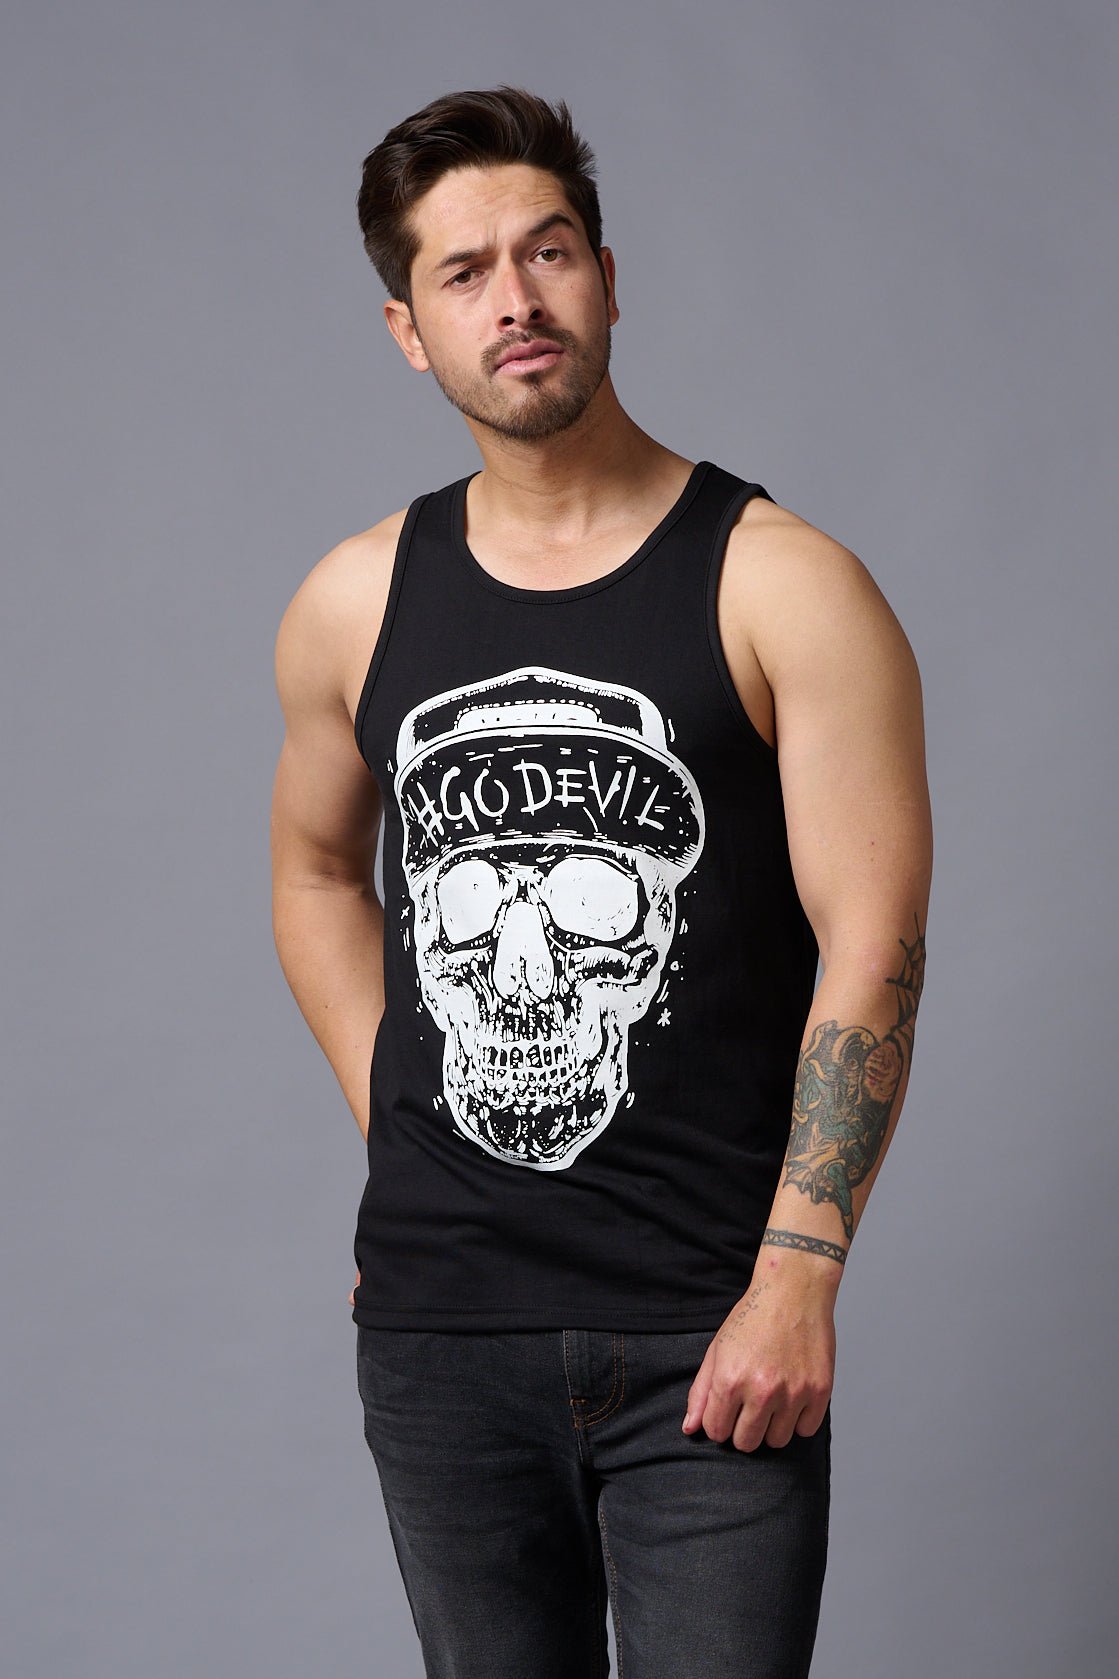 #Go Devil with Skull Printed Vest for Men - Go Devil